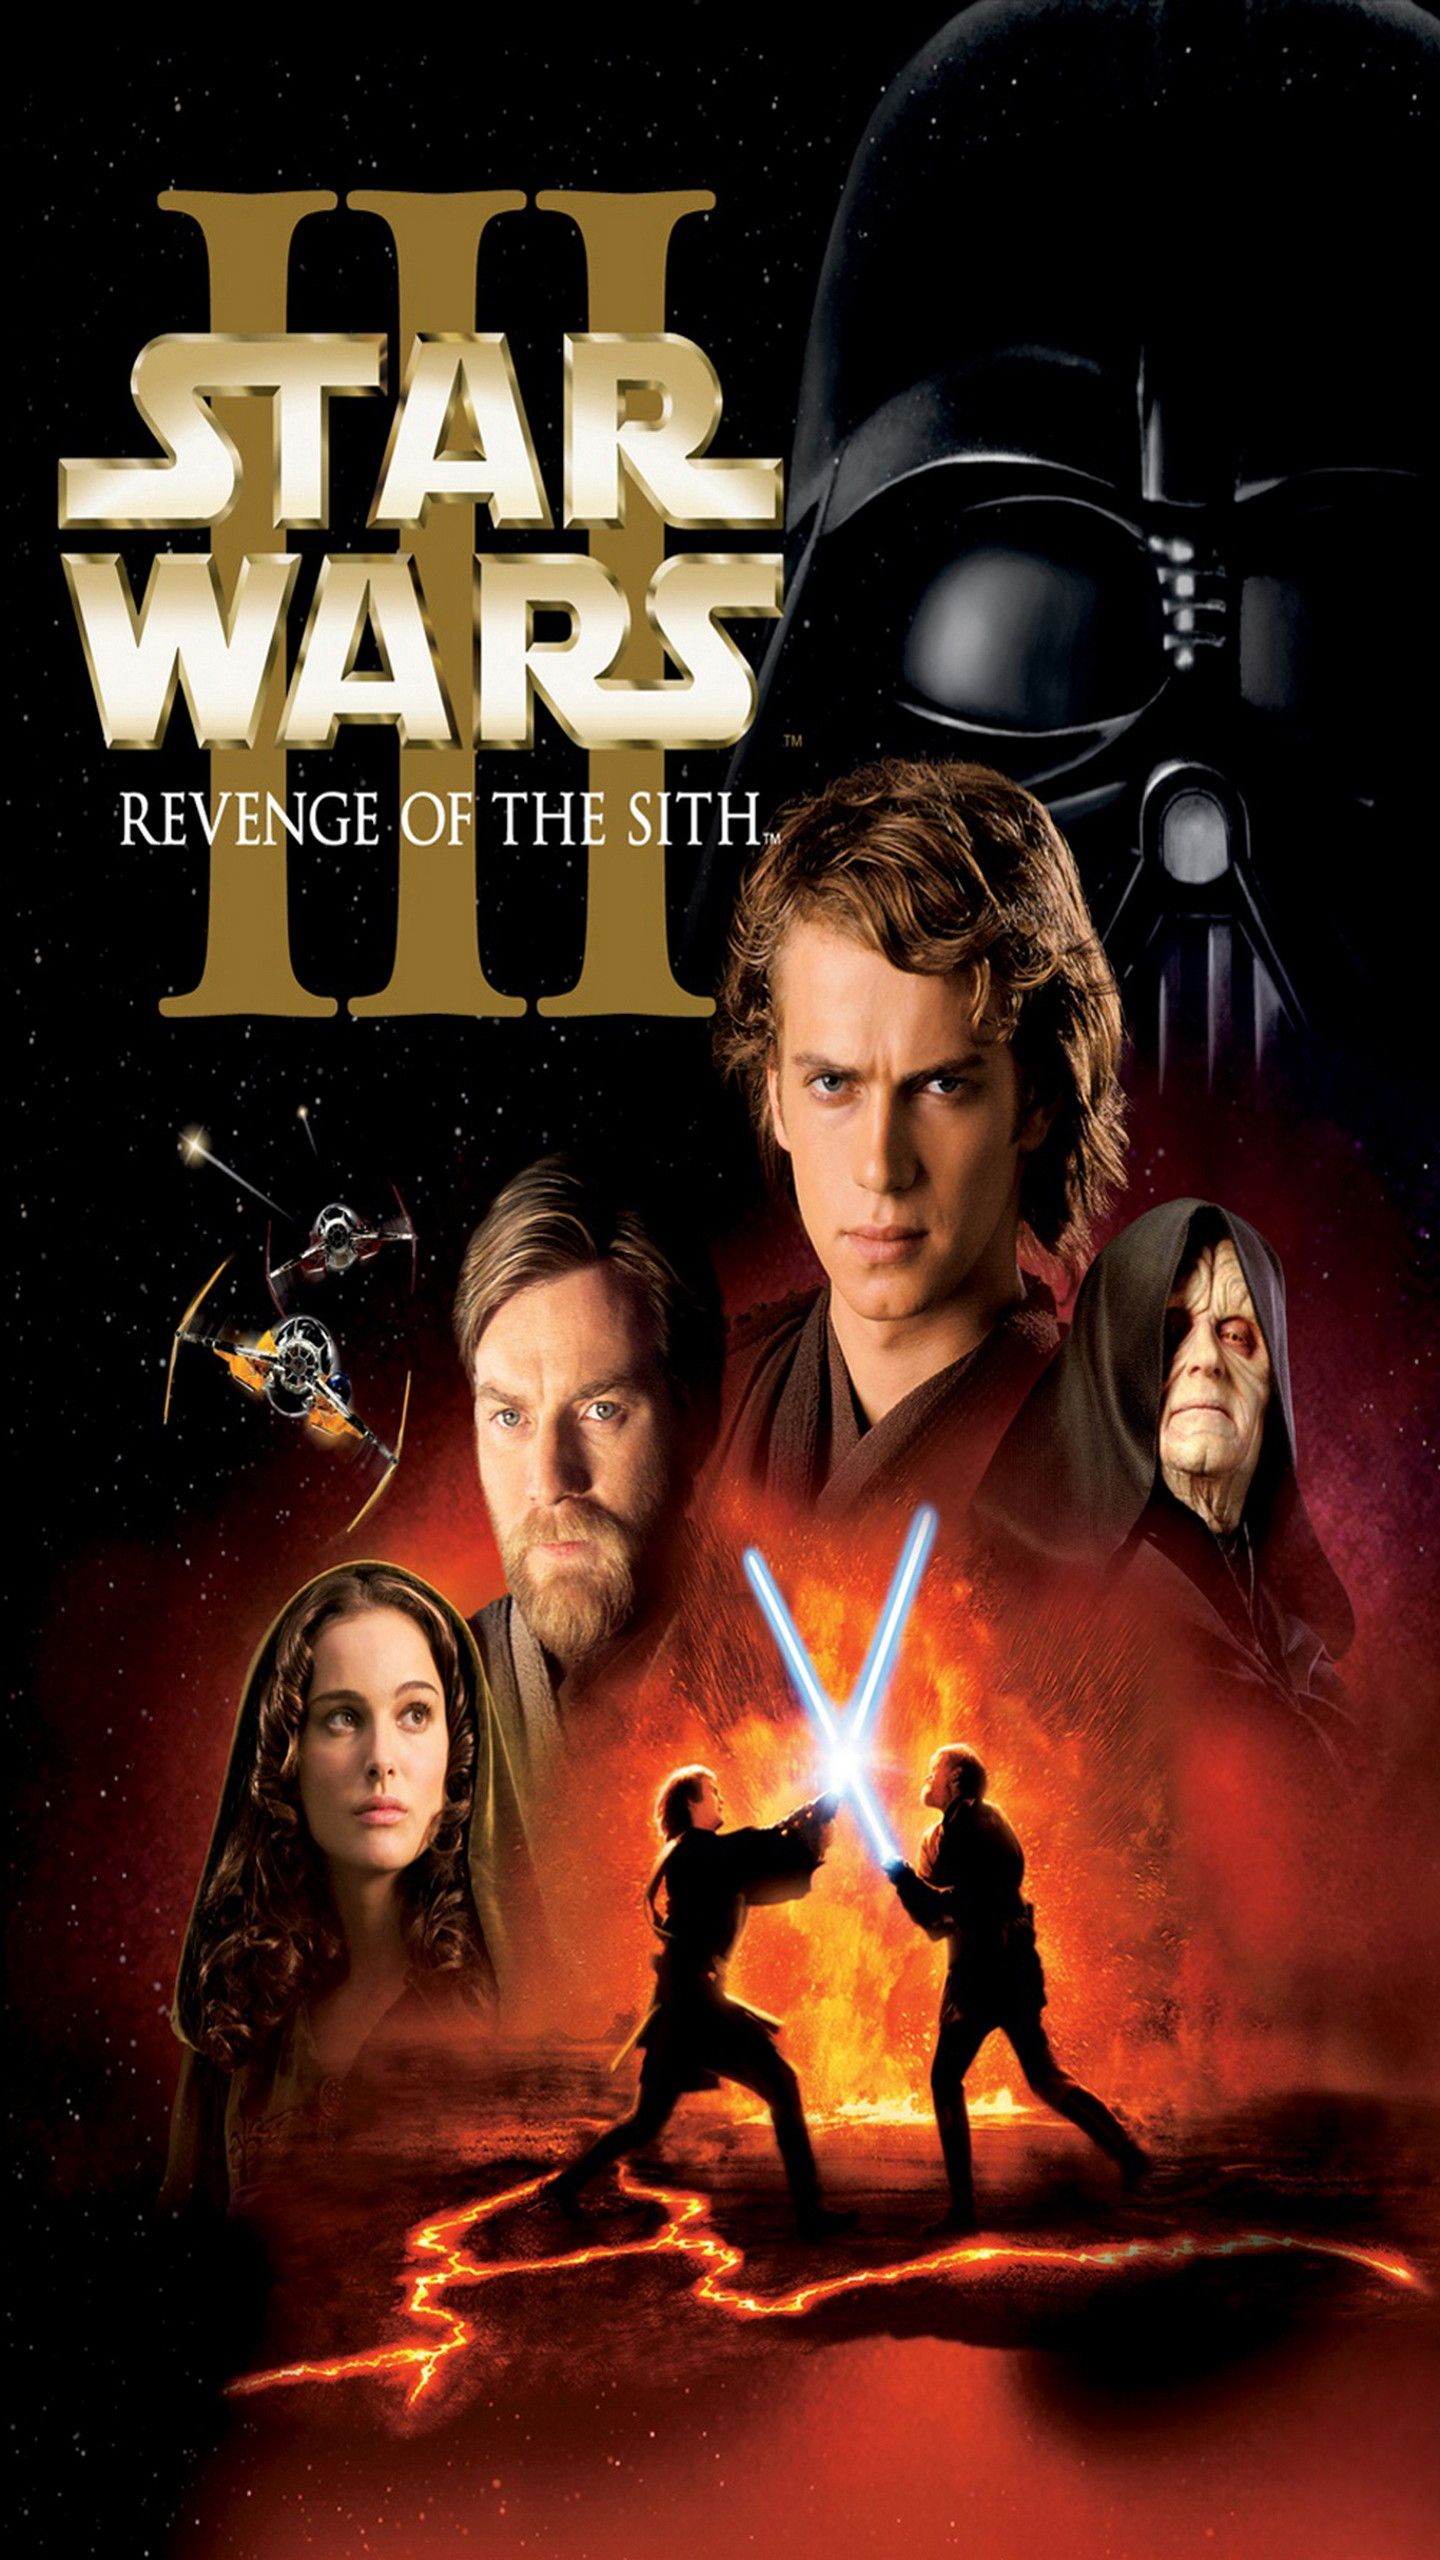 Star Wars Episode Iii Revenge Of The Sith Galaxy Note Wars Episode Iii Revenge Of The Sith Poster